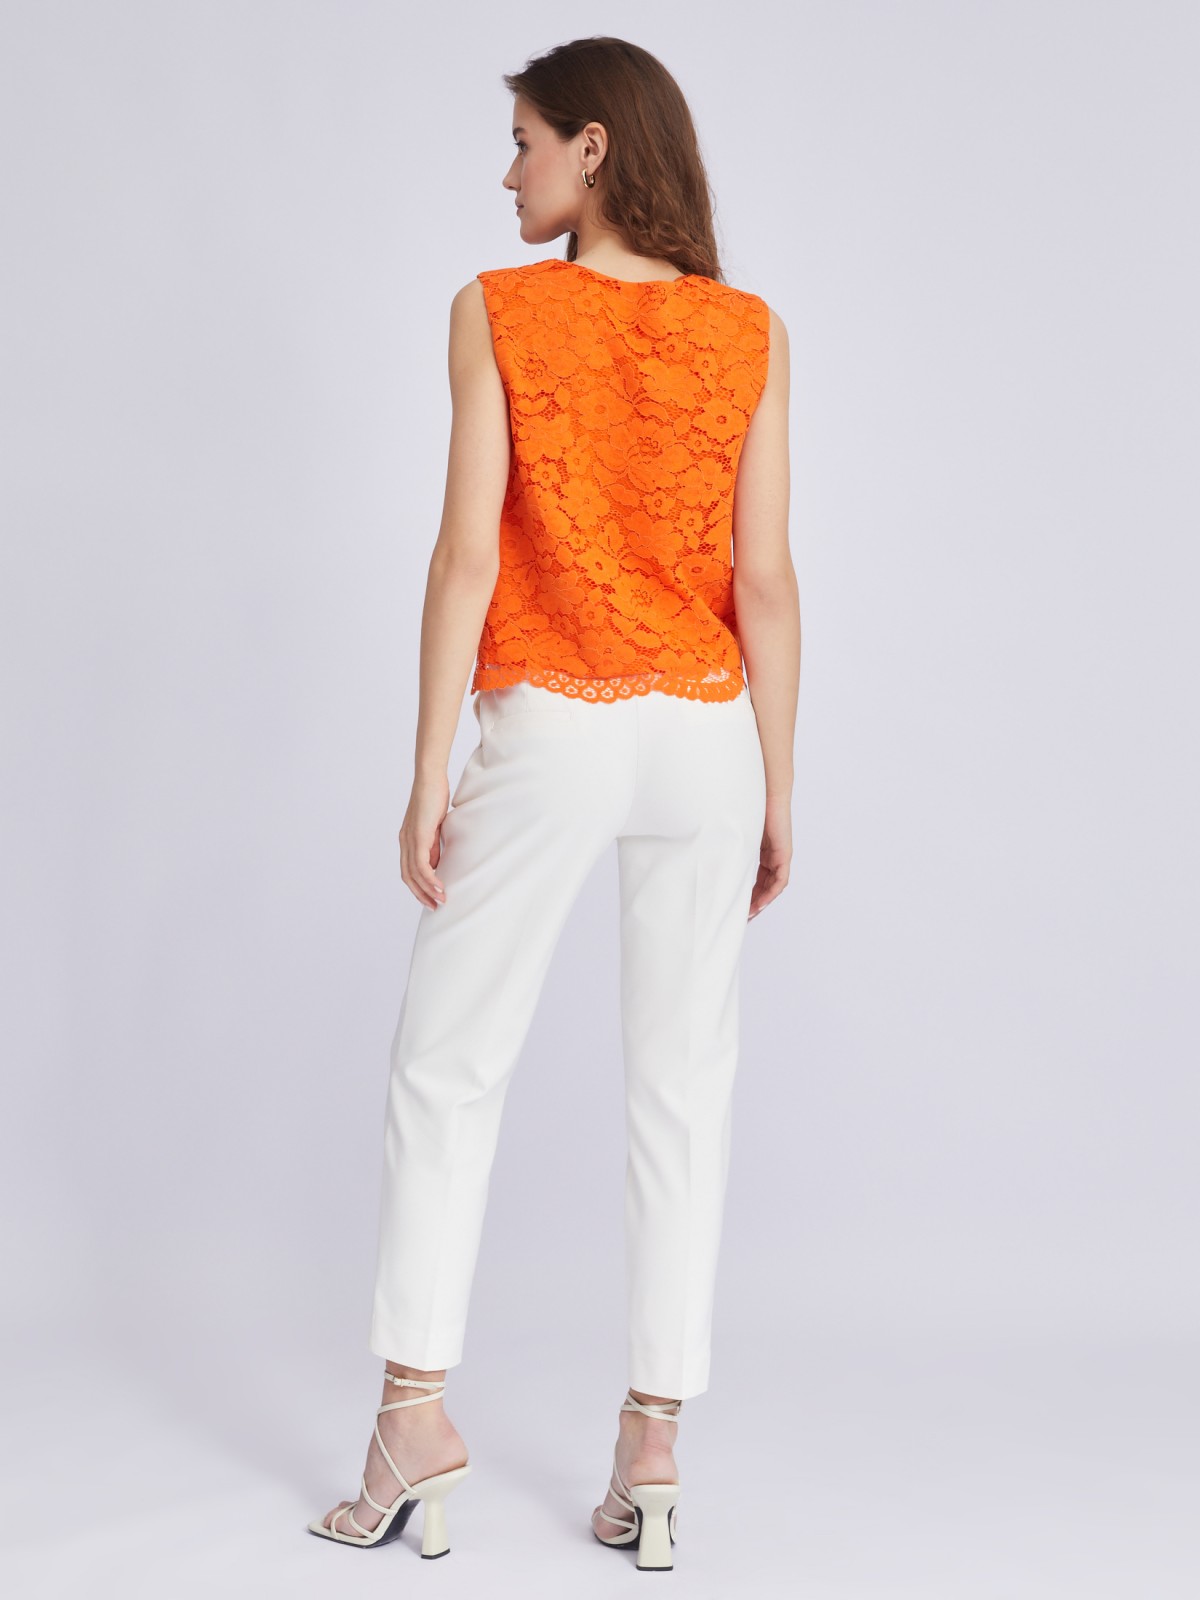 Кружевной топ-блузка без рукавов zolla 02324132L053, цвет оранжевый, размер XS - фото 6